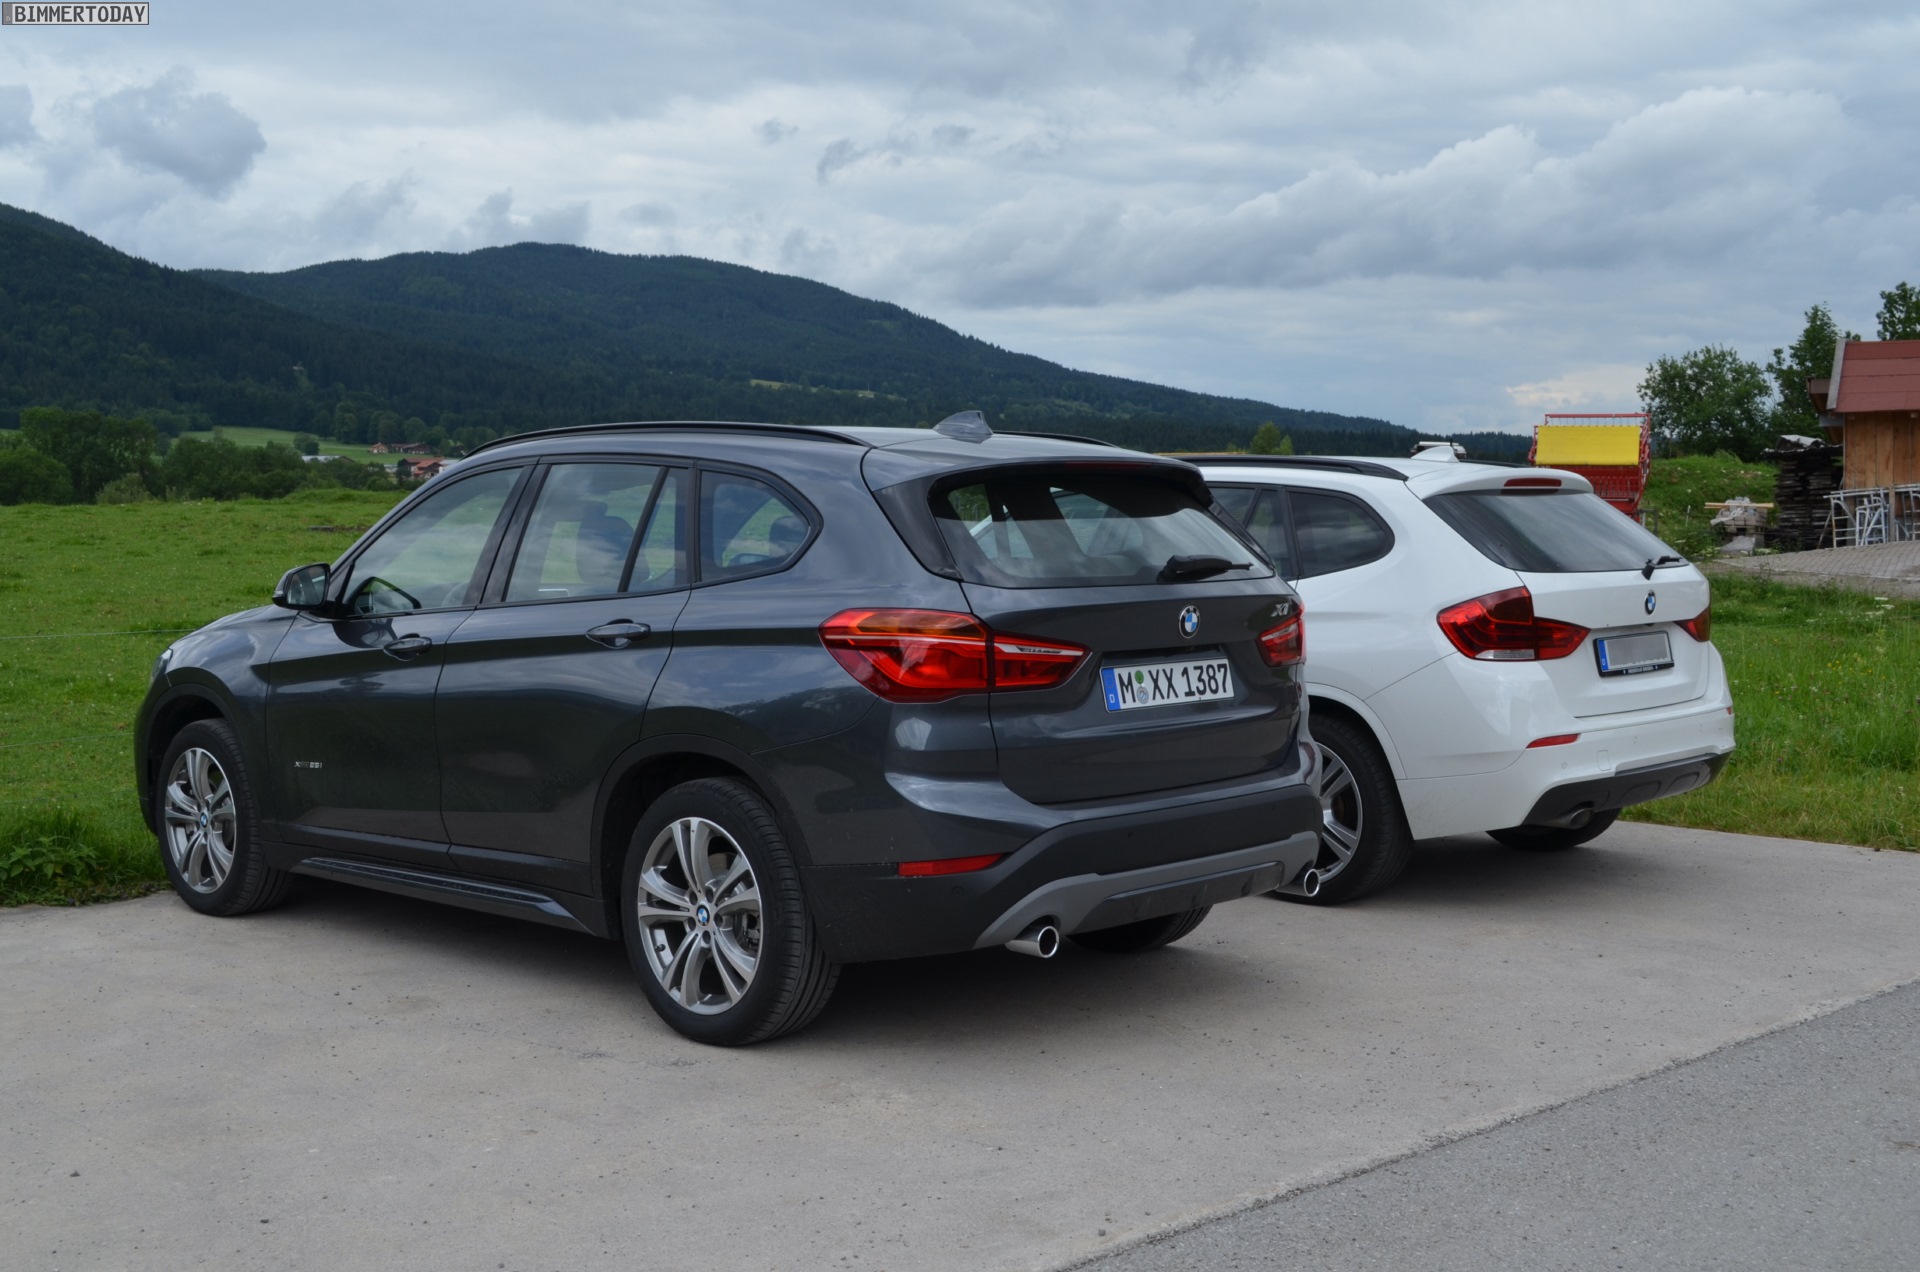 2016 BMW X1 (F48) rear three quarter compared with 2014 BMW X1 (E84)